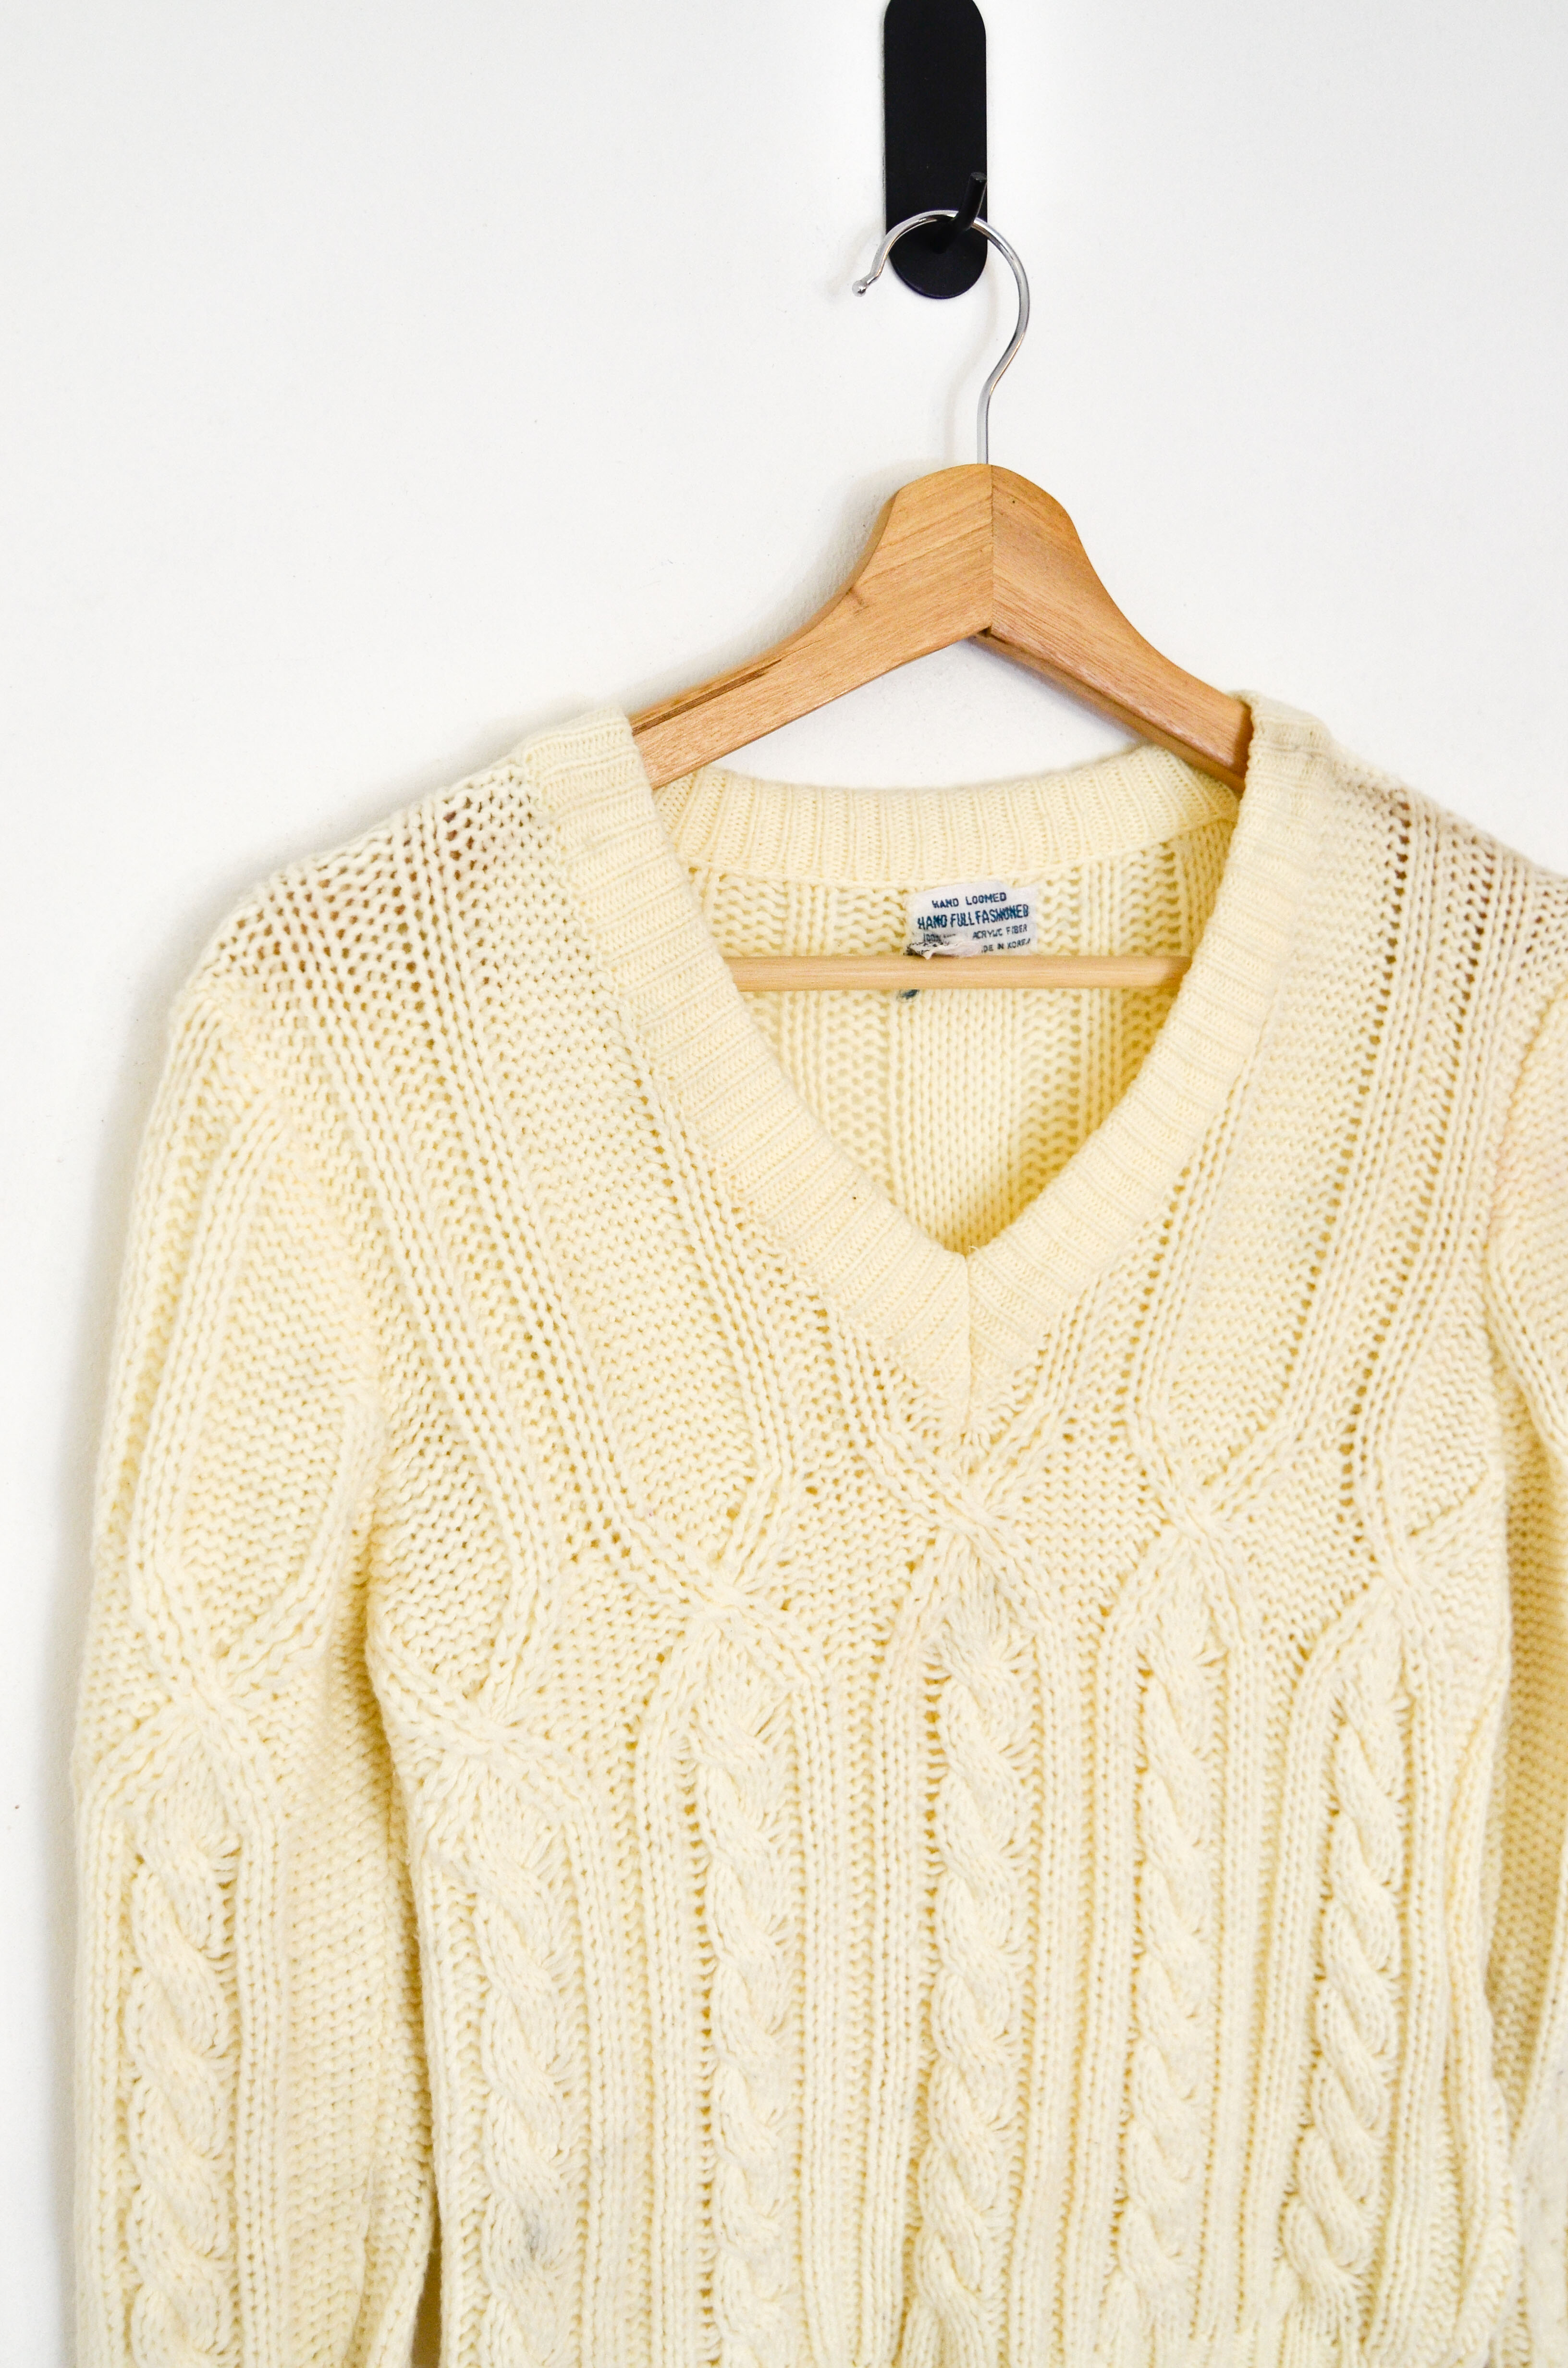 Sweater vintage marfil trenzado